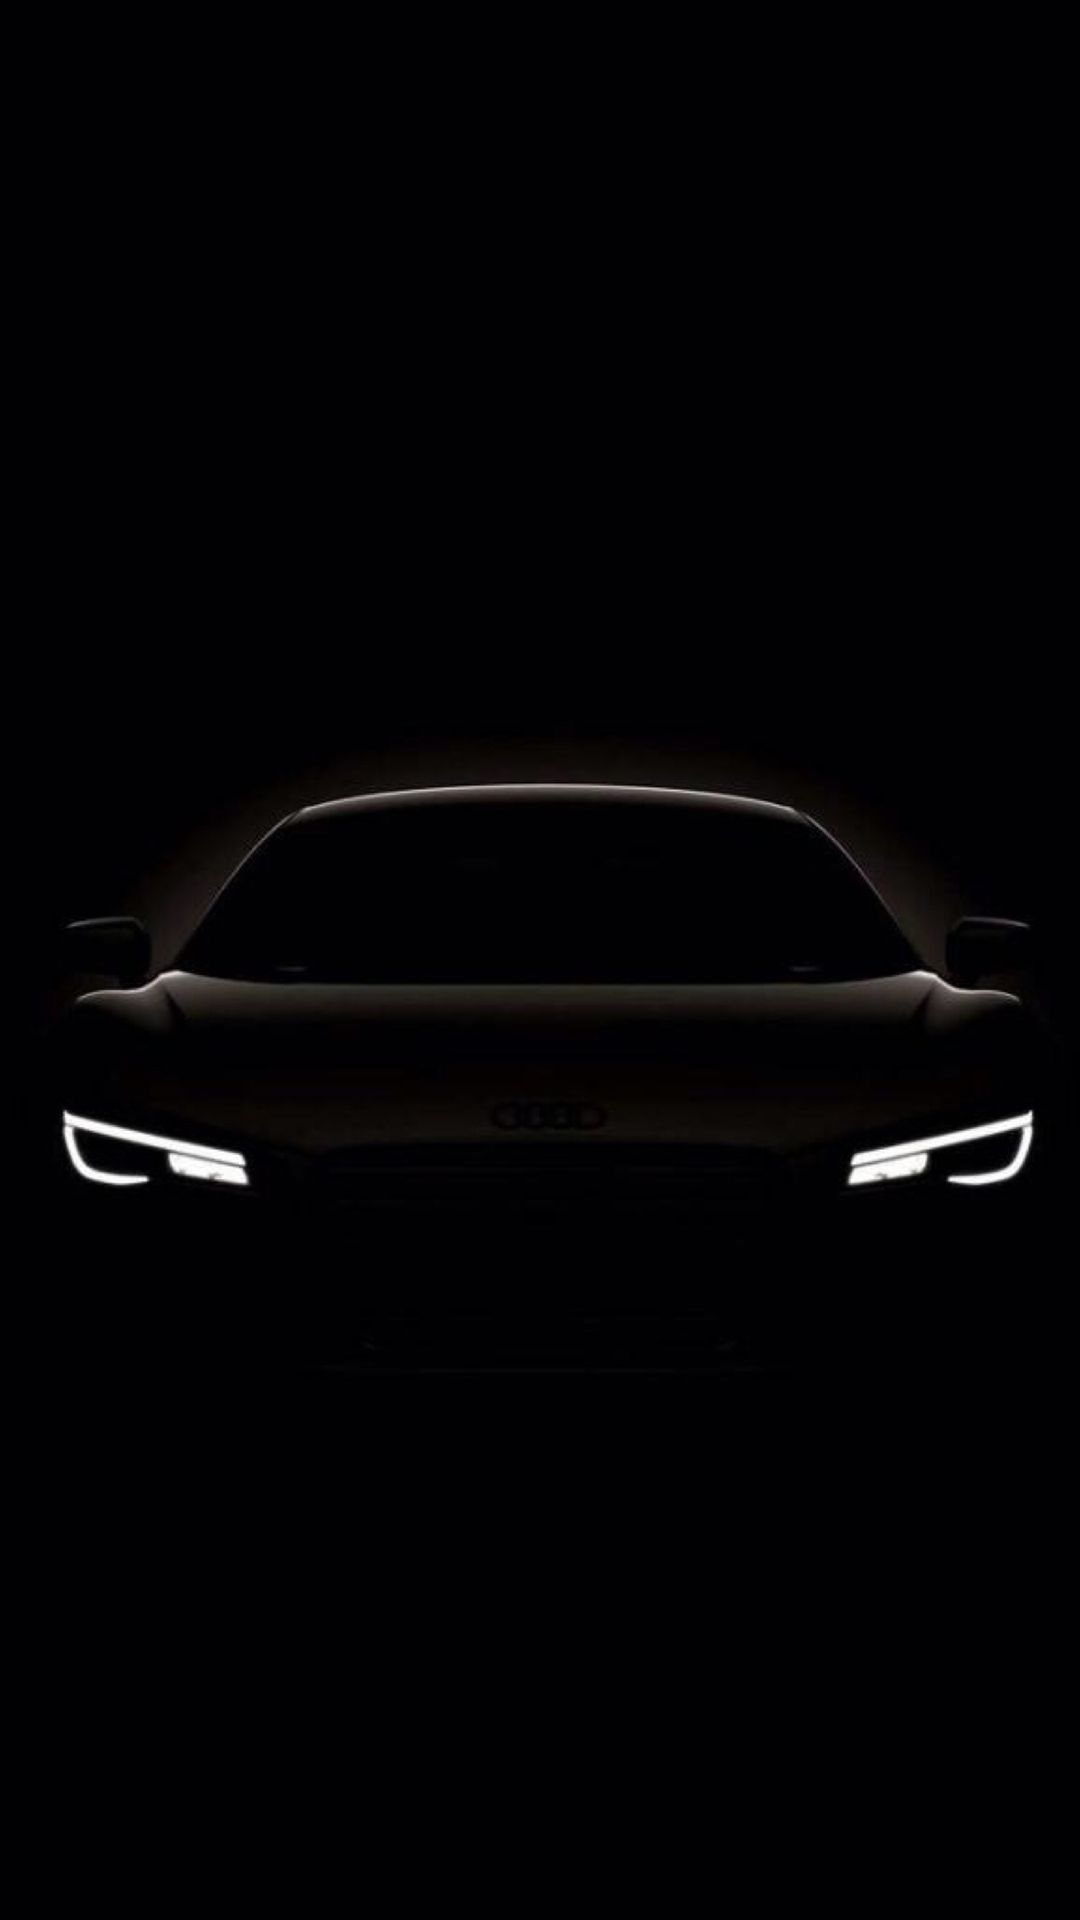 Dark Shiny Concept Car iPhone Wallpaper Download iPhone